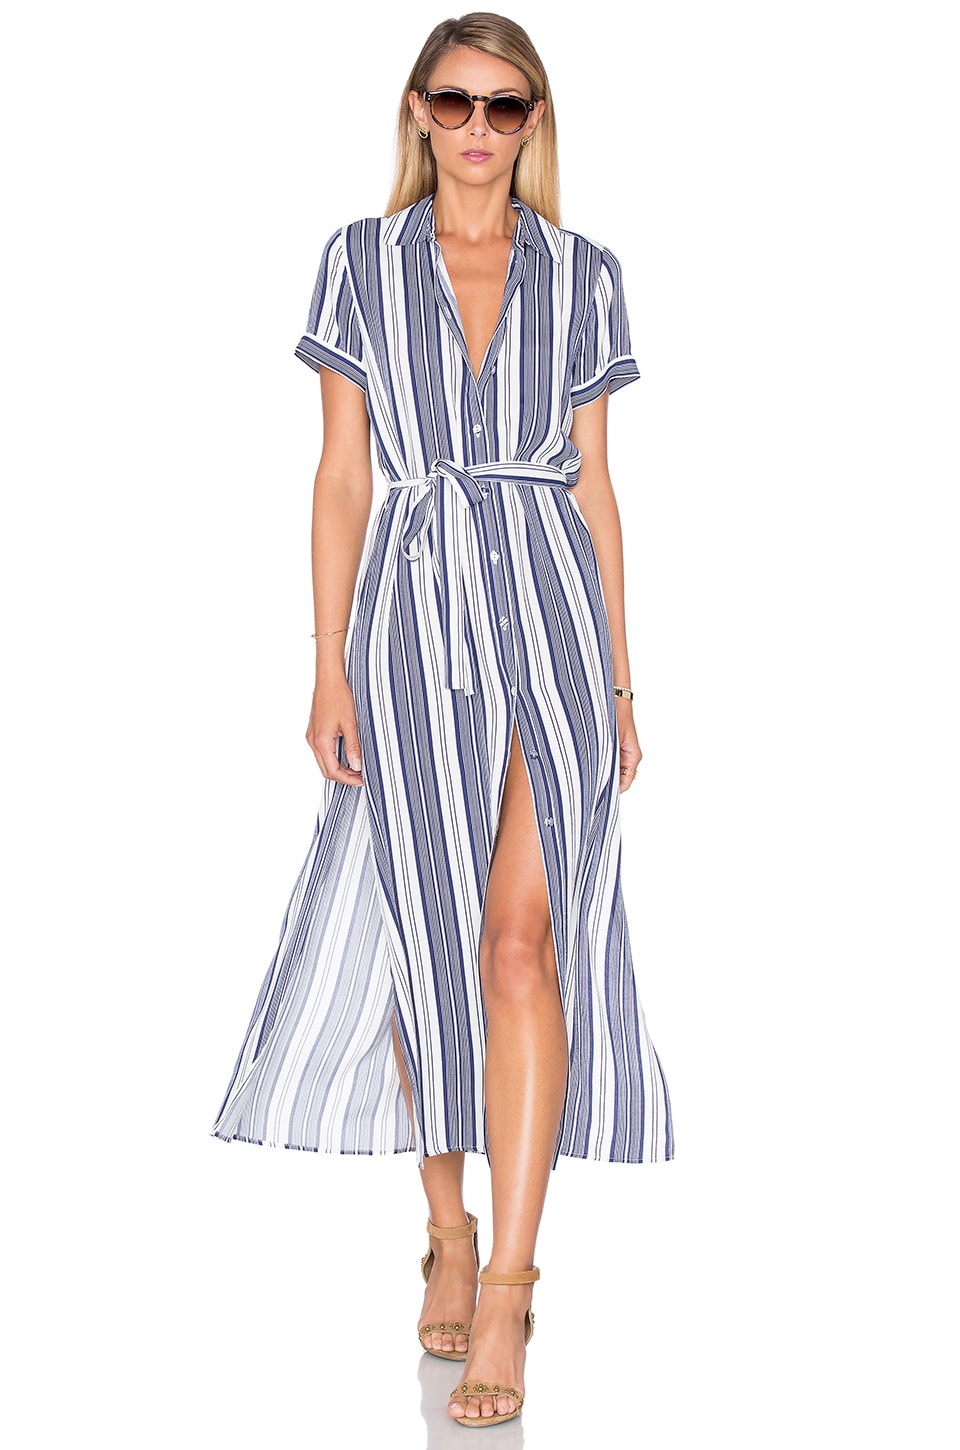 L'Academie The Maxi Shirt Dress in Sailor Stripe | REVOLVE